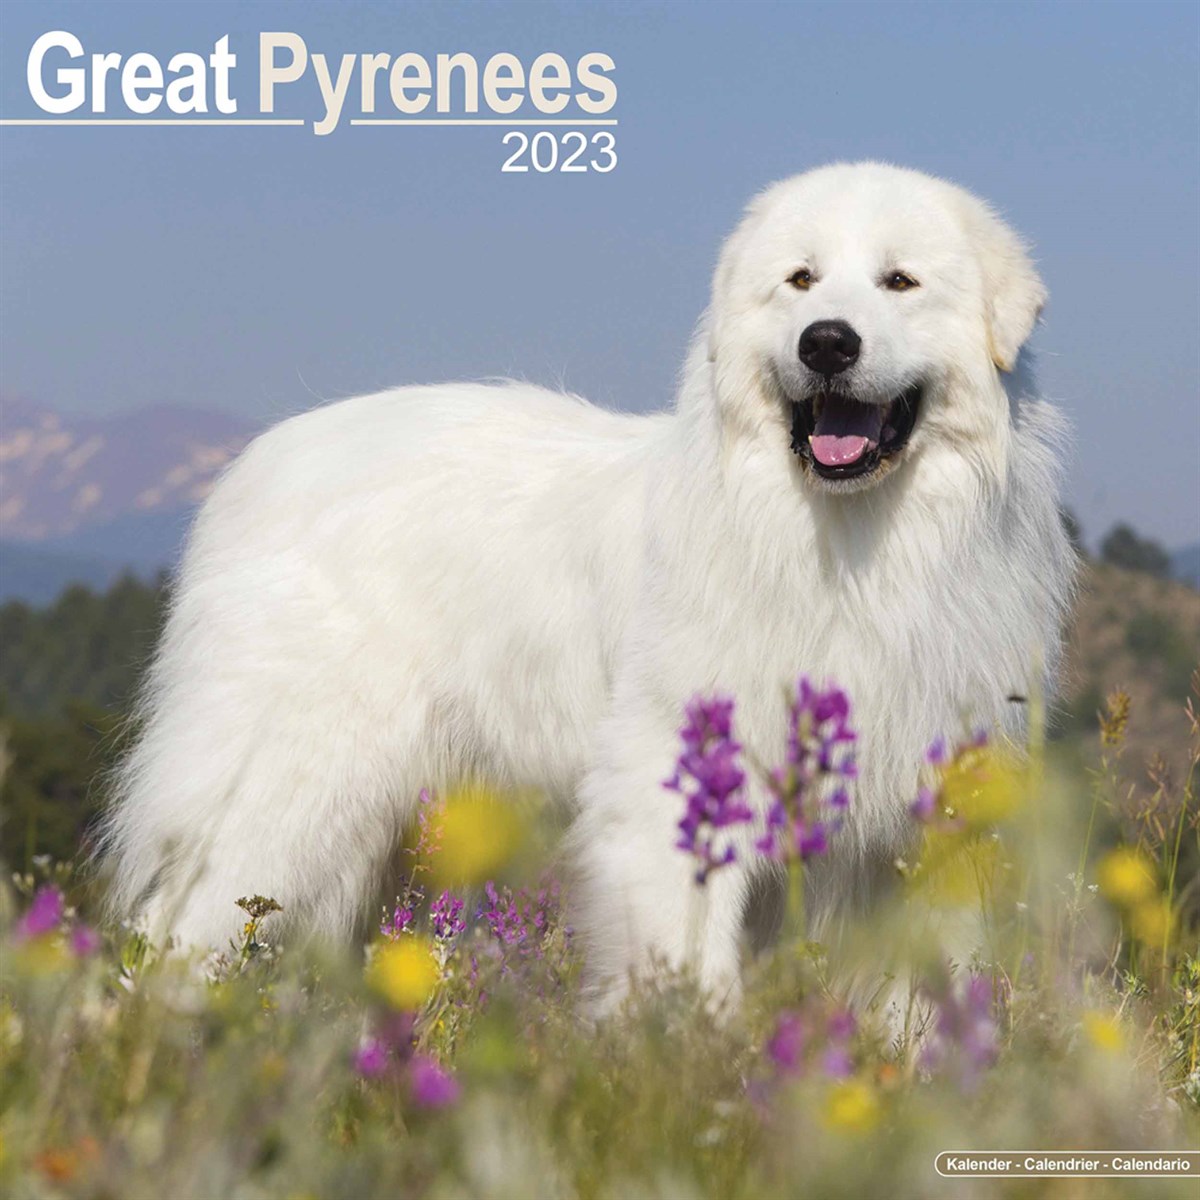 Great Pyrenees 2023 Calendars